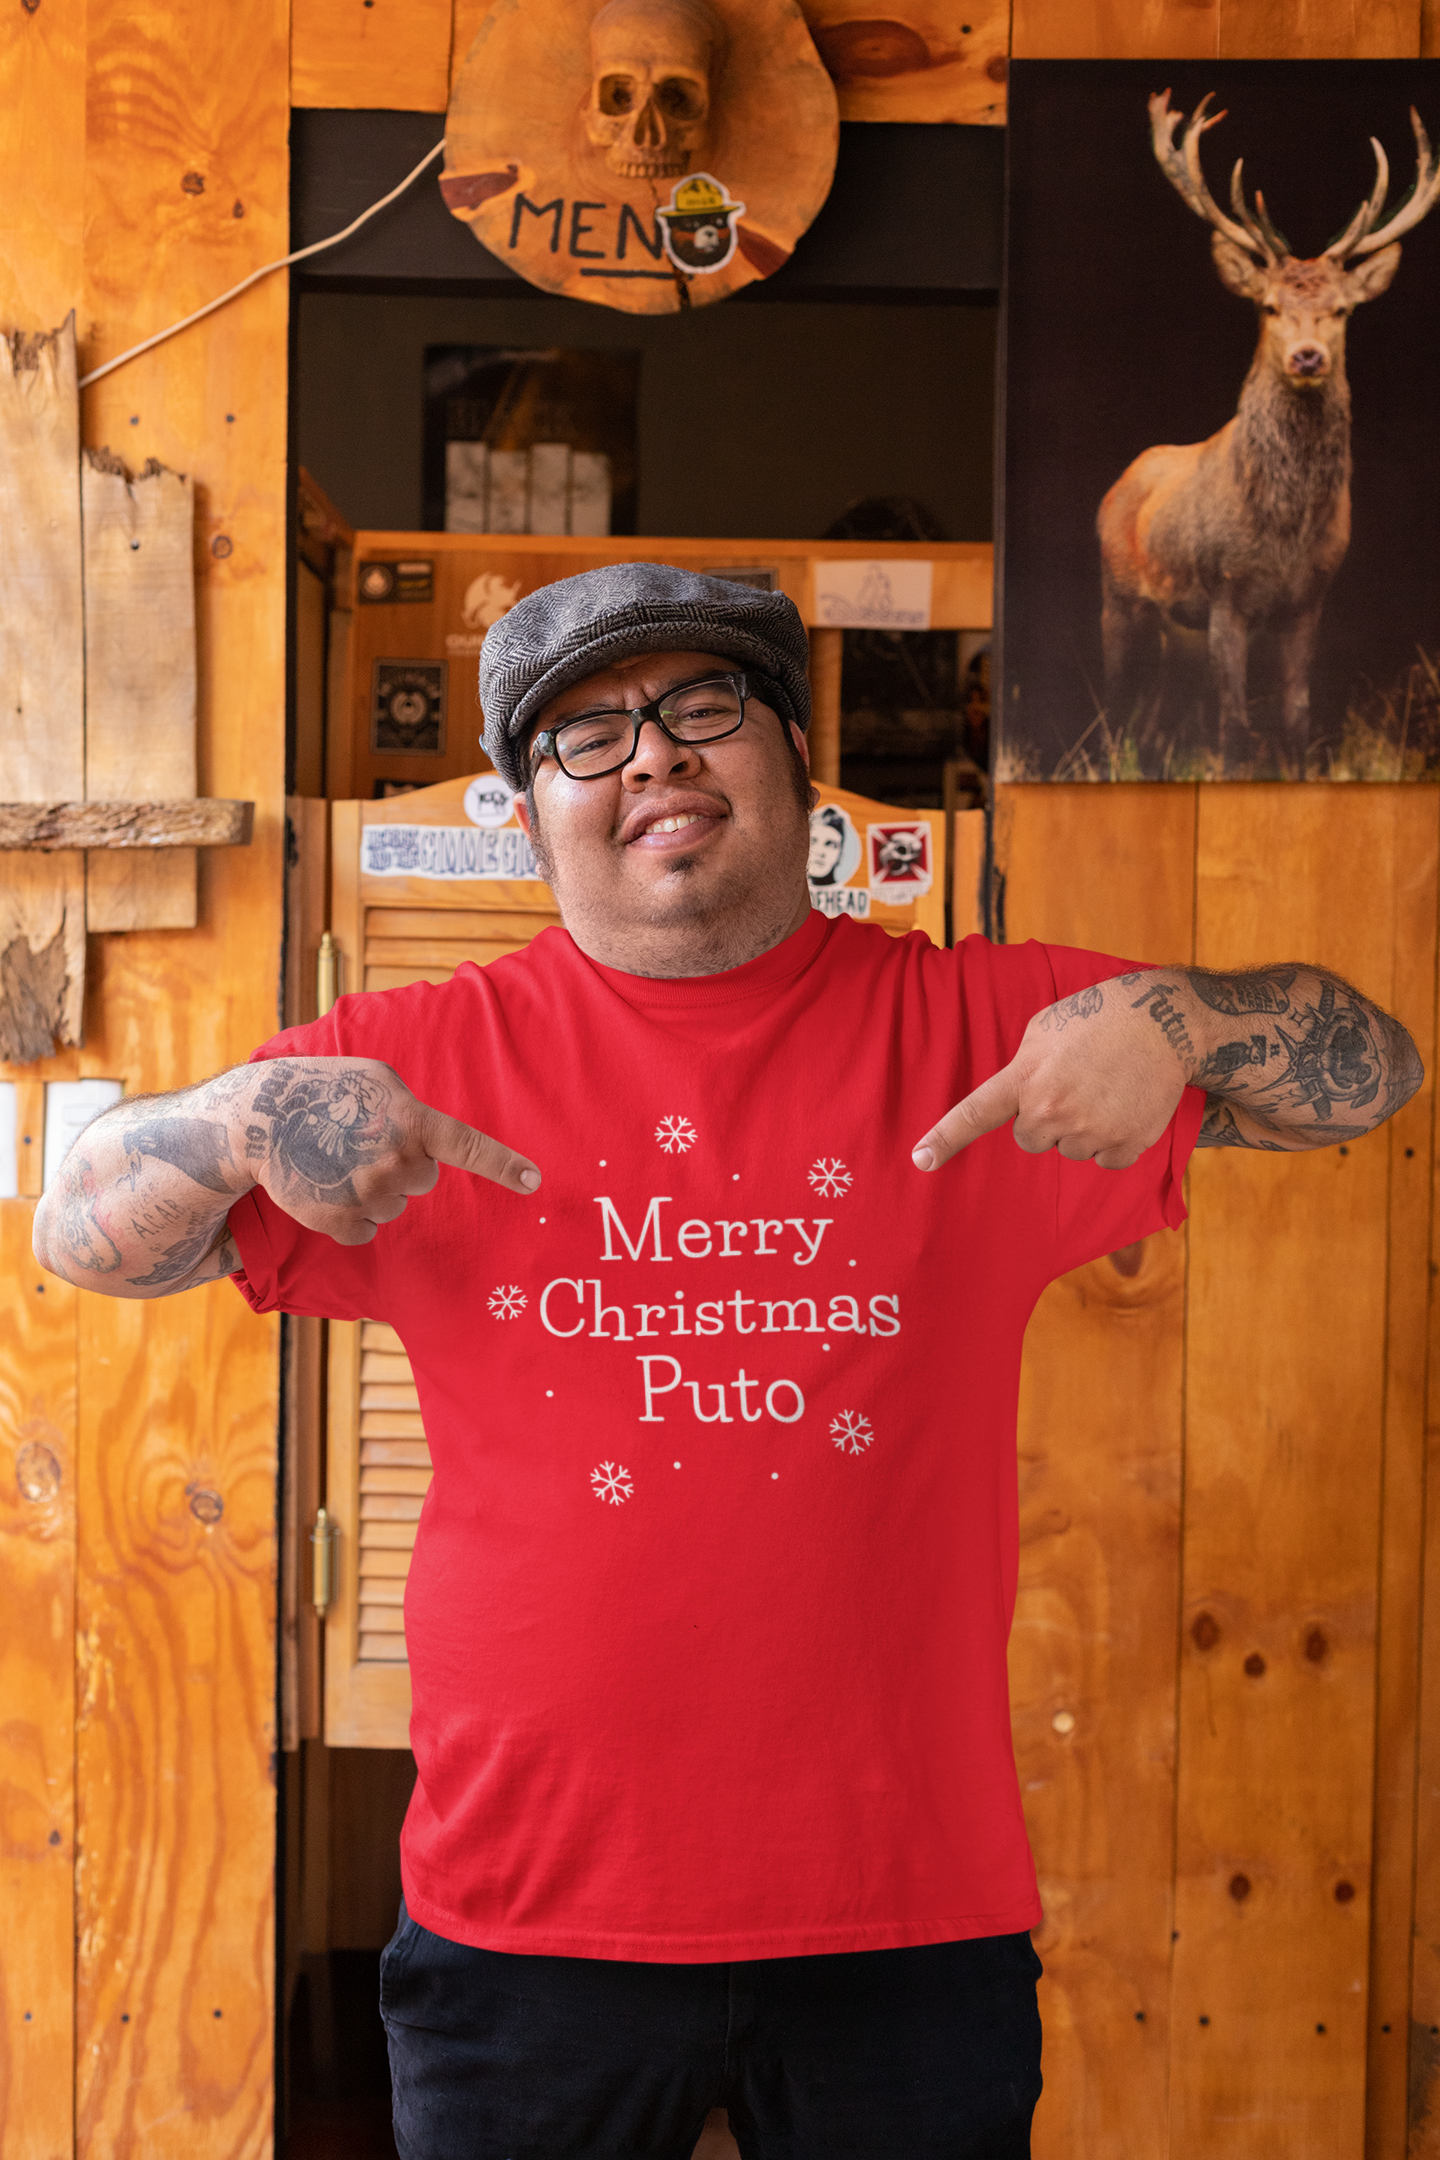 Merry Christmas Puto - Obnoxious Funny Holiday Shirt for Men Husband Dad